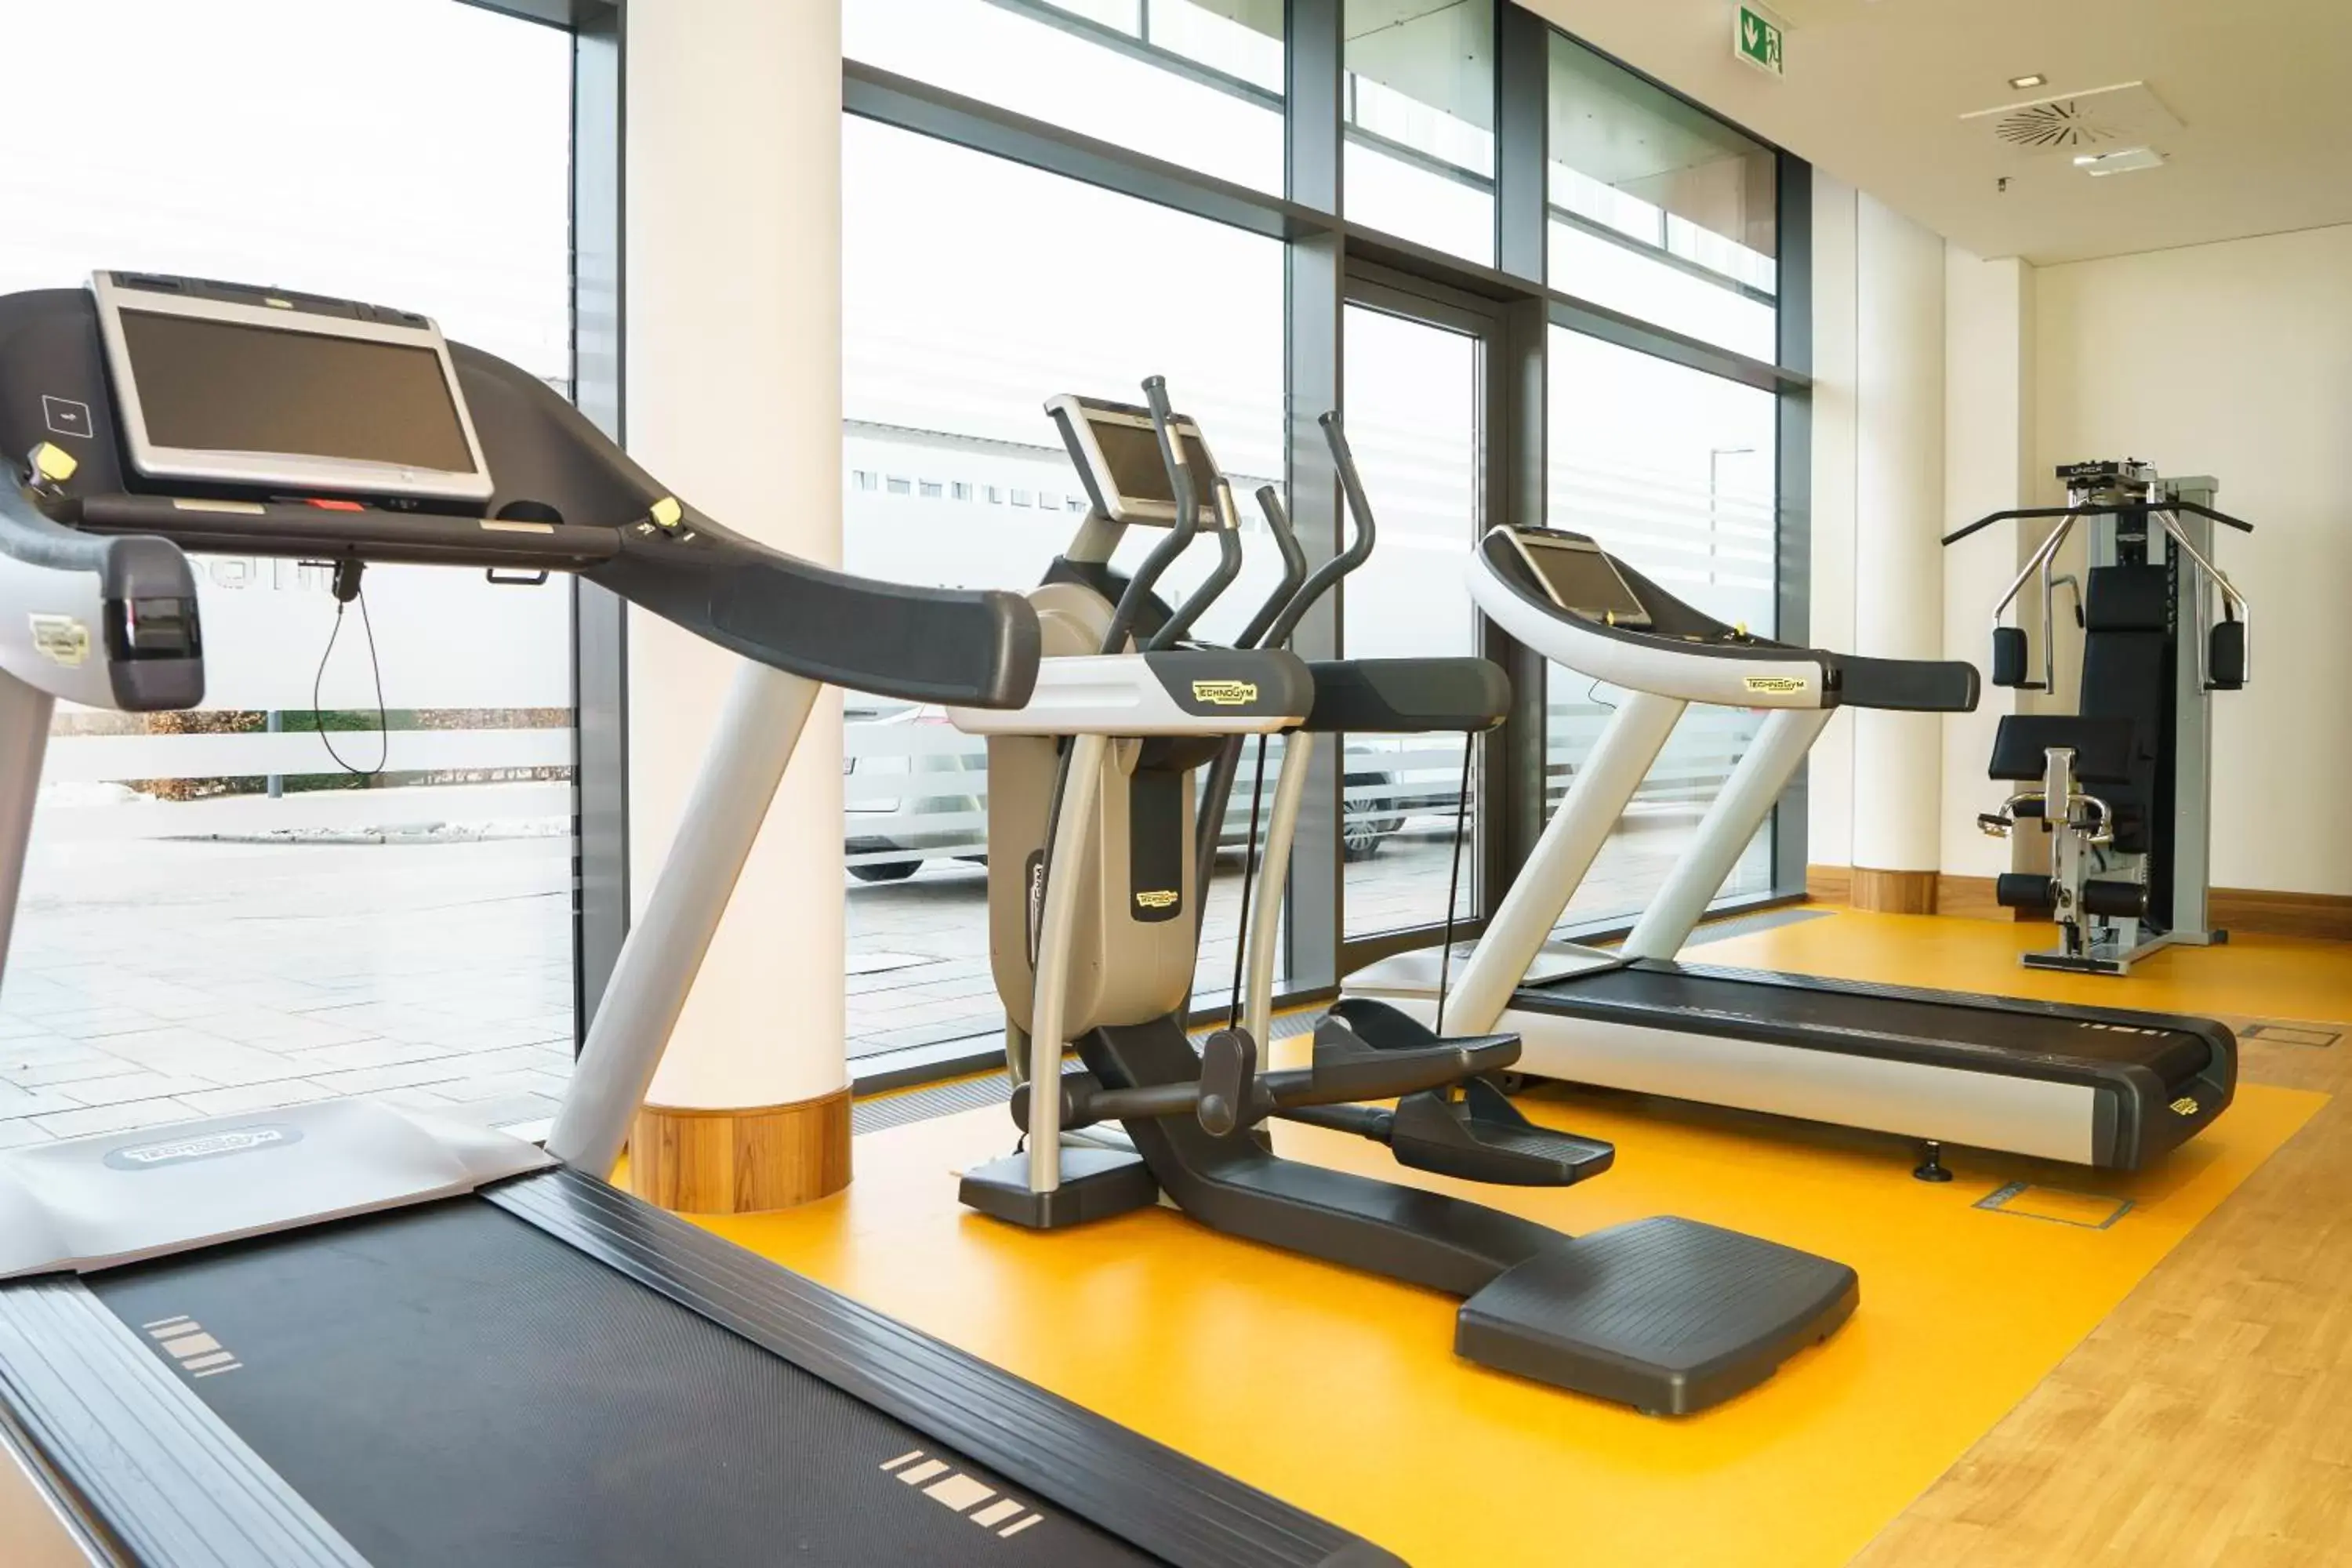 Fitness centre/facilities, Fitness Center/Facilities in Novotel München Messe